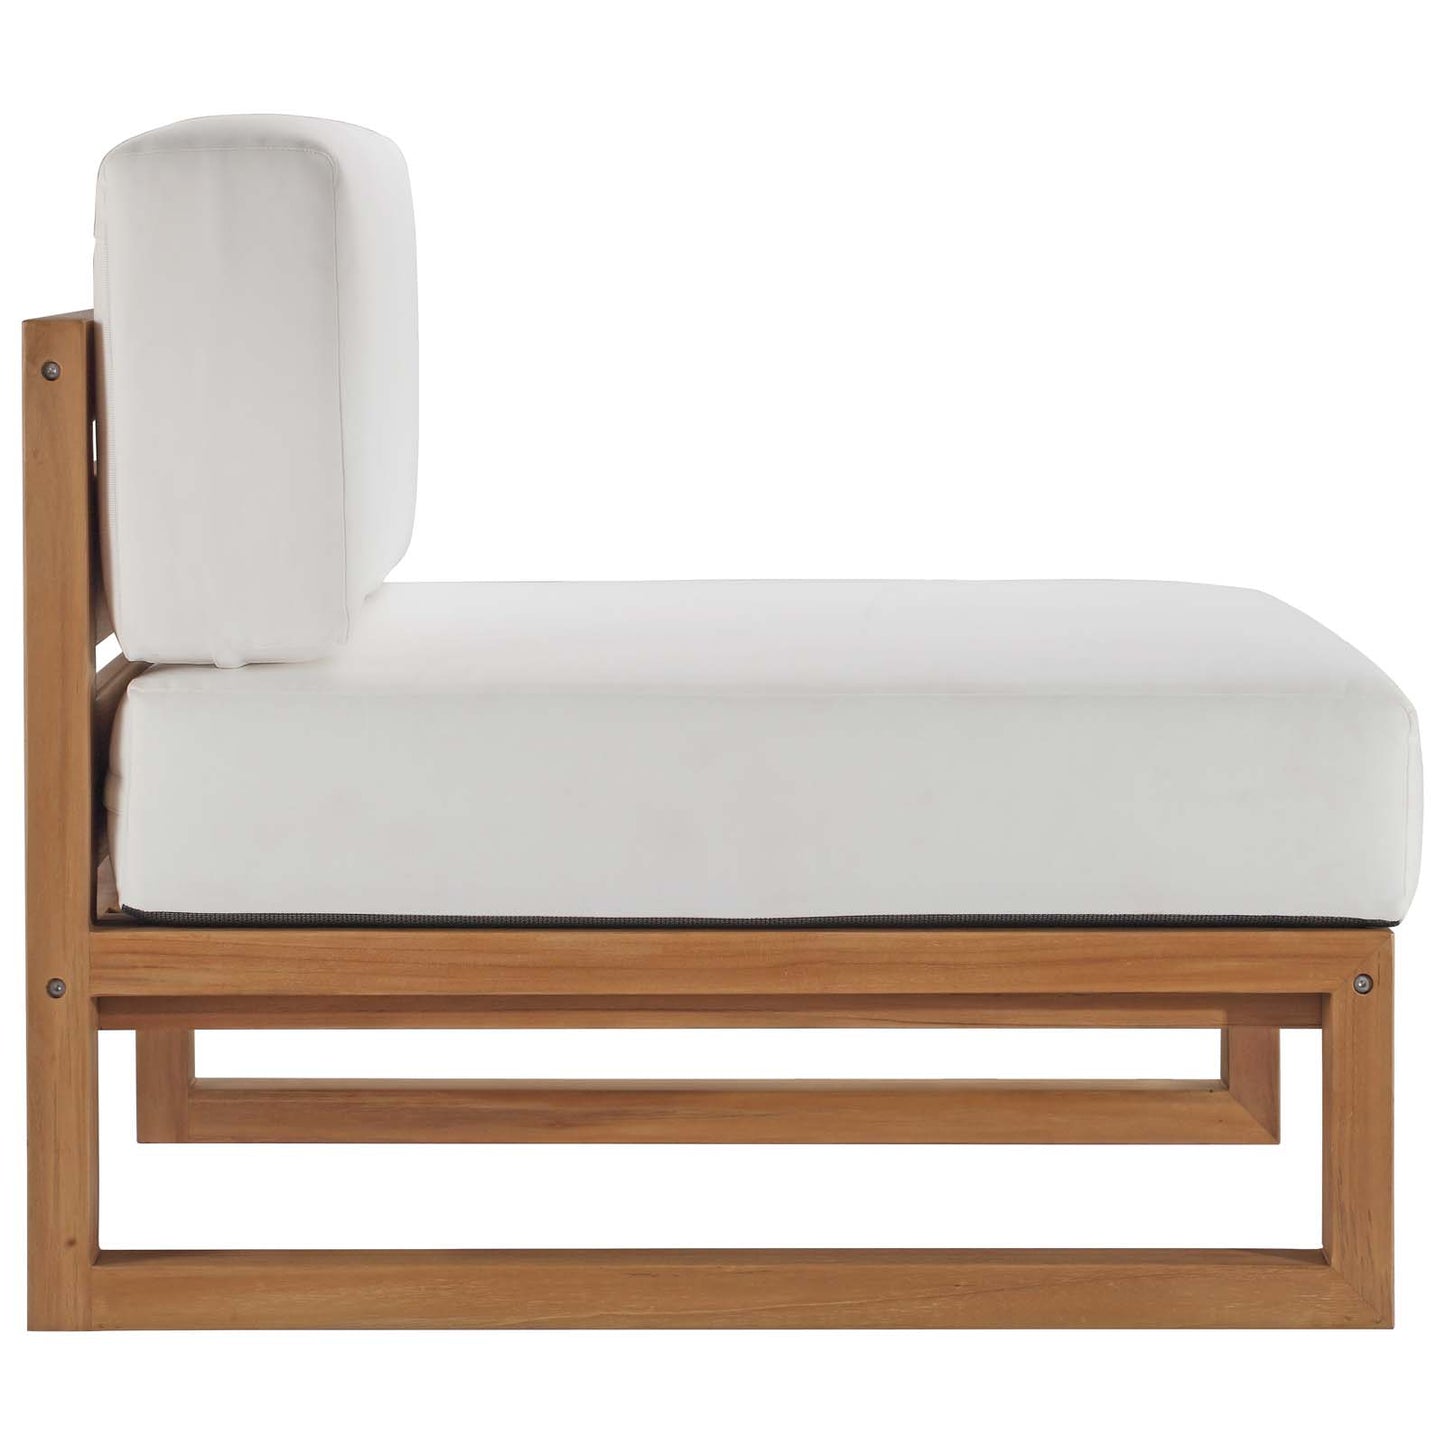 Upland Outdoor Patio Teak Wood 4-Piece Sectional Sofa Set Natural White EEI-4253-NAT-WHI-SET